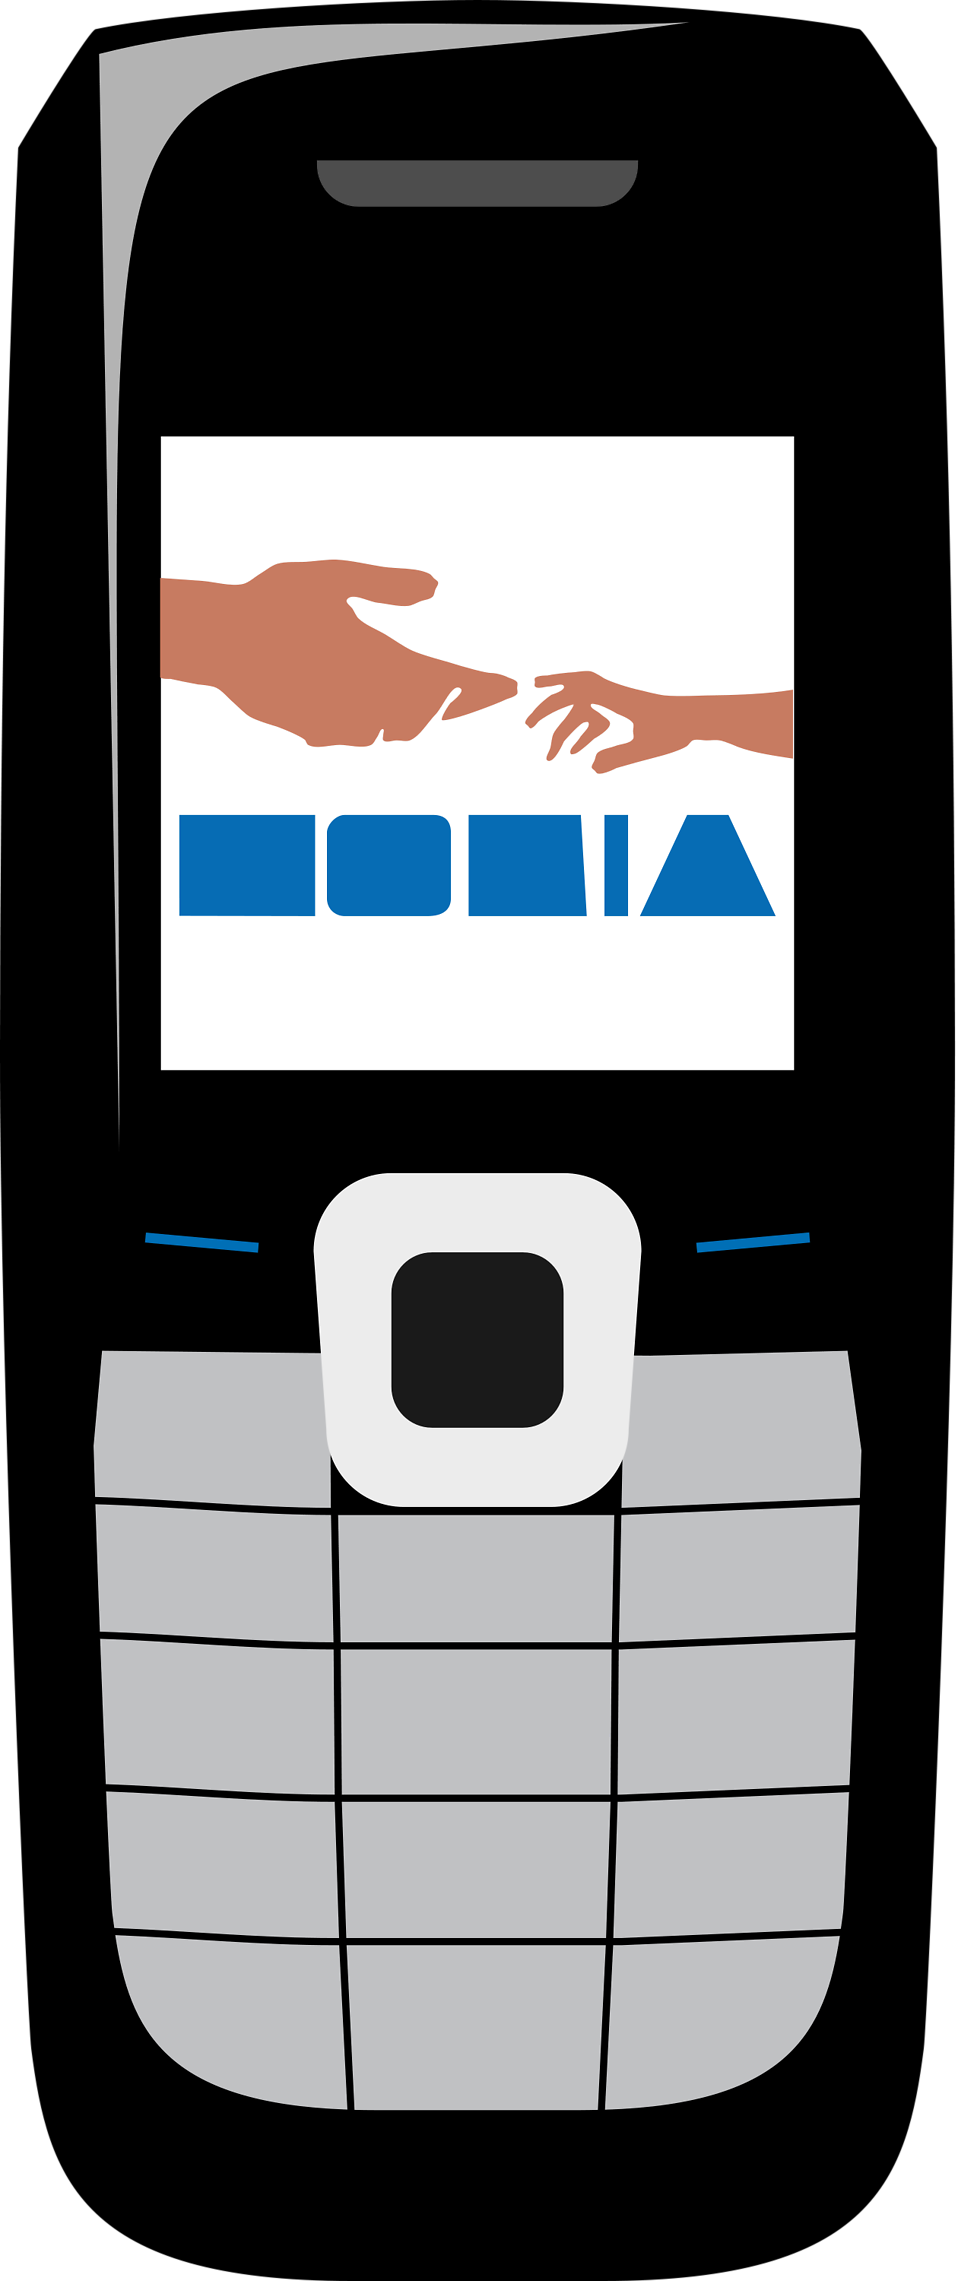 Phone Texting Symbols - Nokia Phone Vector (958x2281)